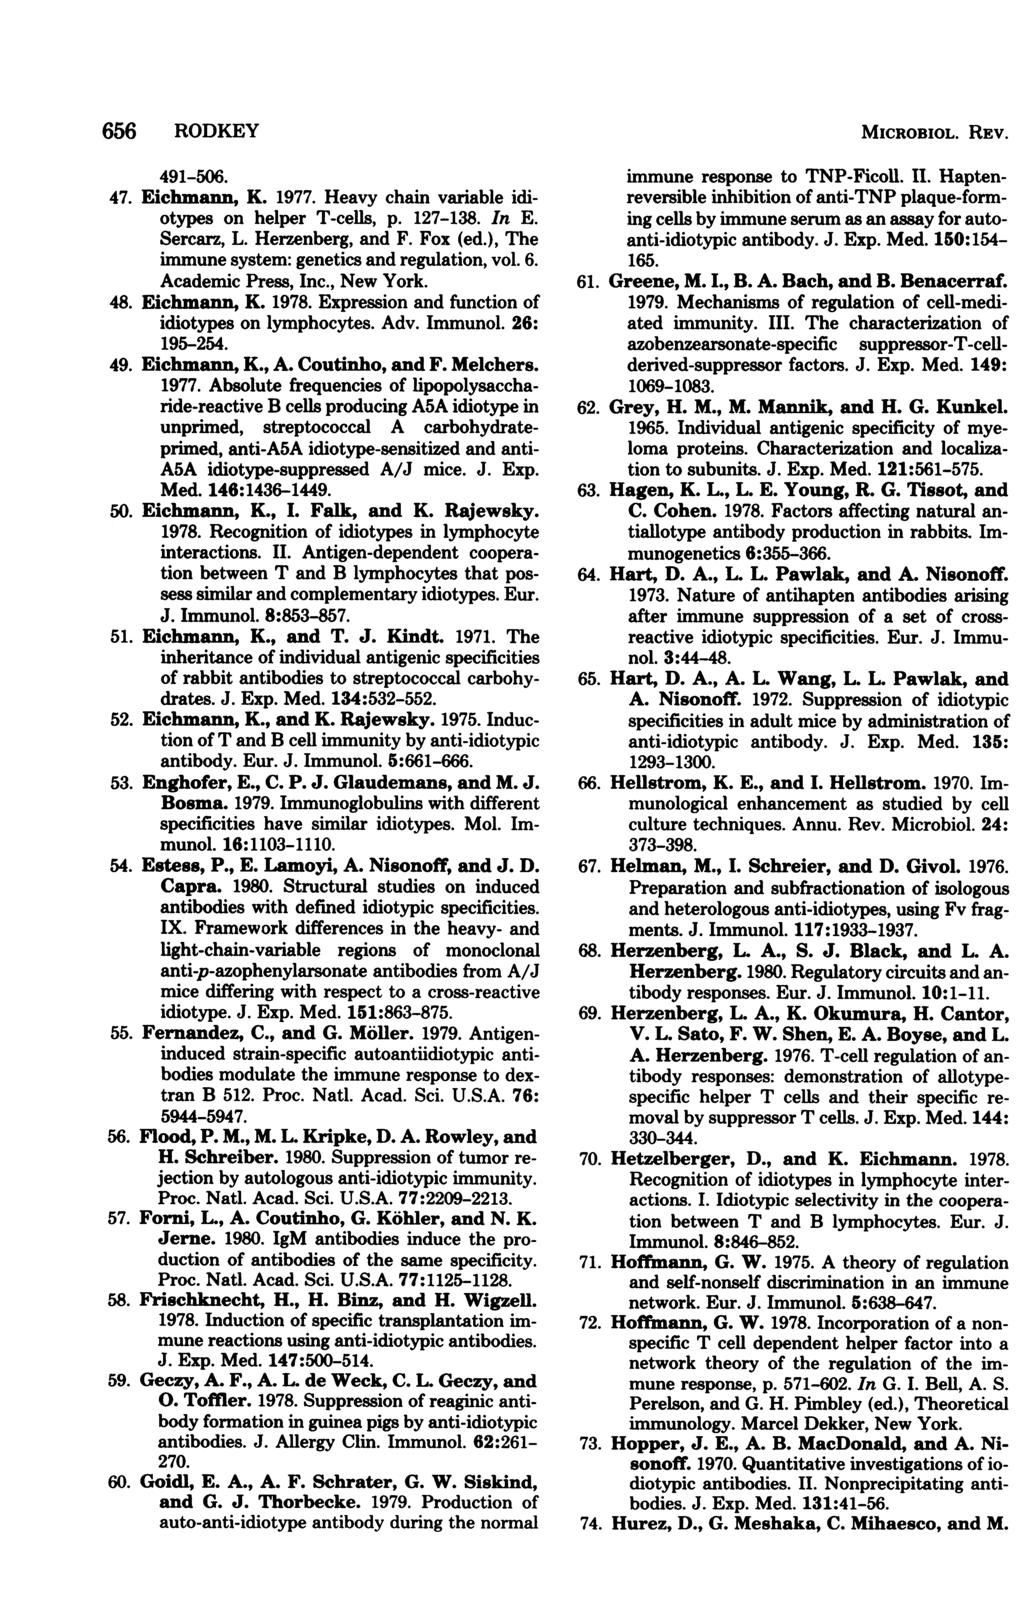 656 RODKEY 491-506. 47. Eichmann, K. 1977. Heavy chain variable idiotypes on helper T-cells, p. 127-138. In E. Sercarz, L. Herzenberg, and F. Fox (ed.